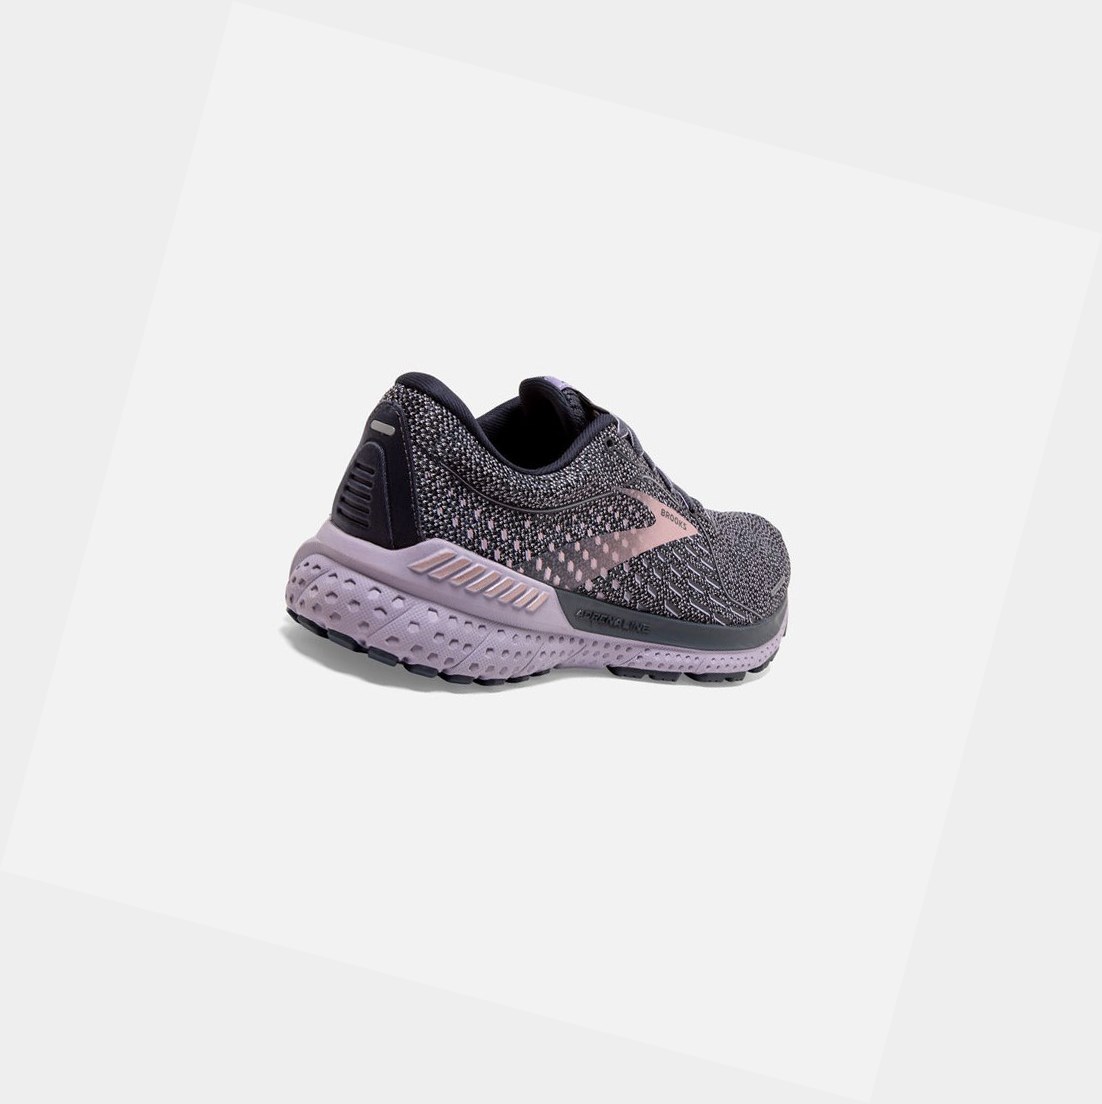 Brooks Adrenaline GTS 21 Women's Walking Shoes Ombre / Lavender / Metallic | MWFZ-28790